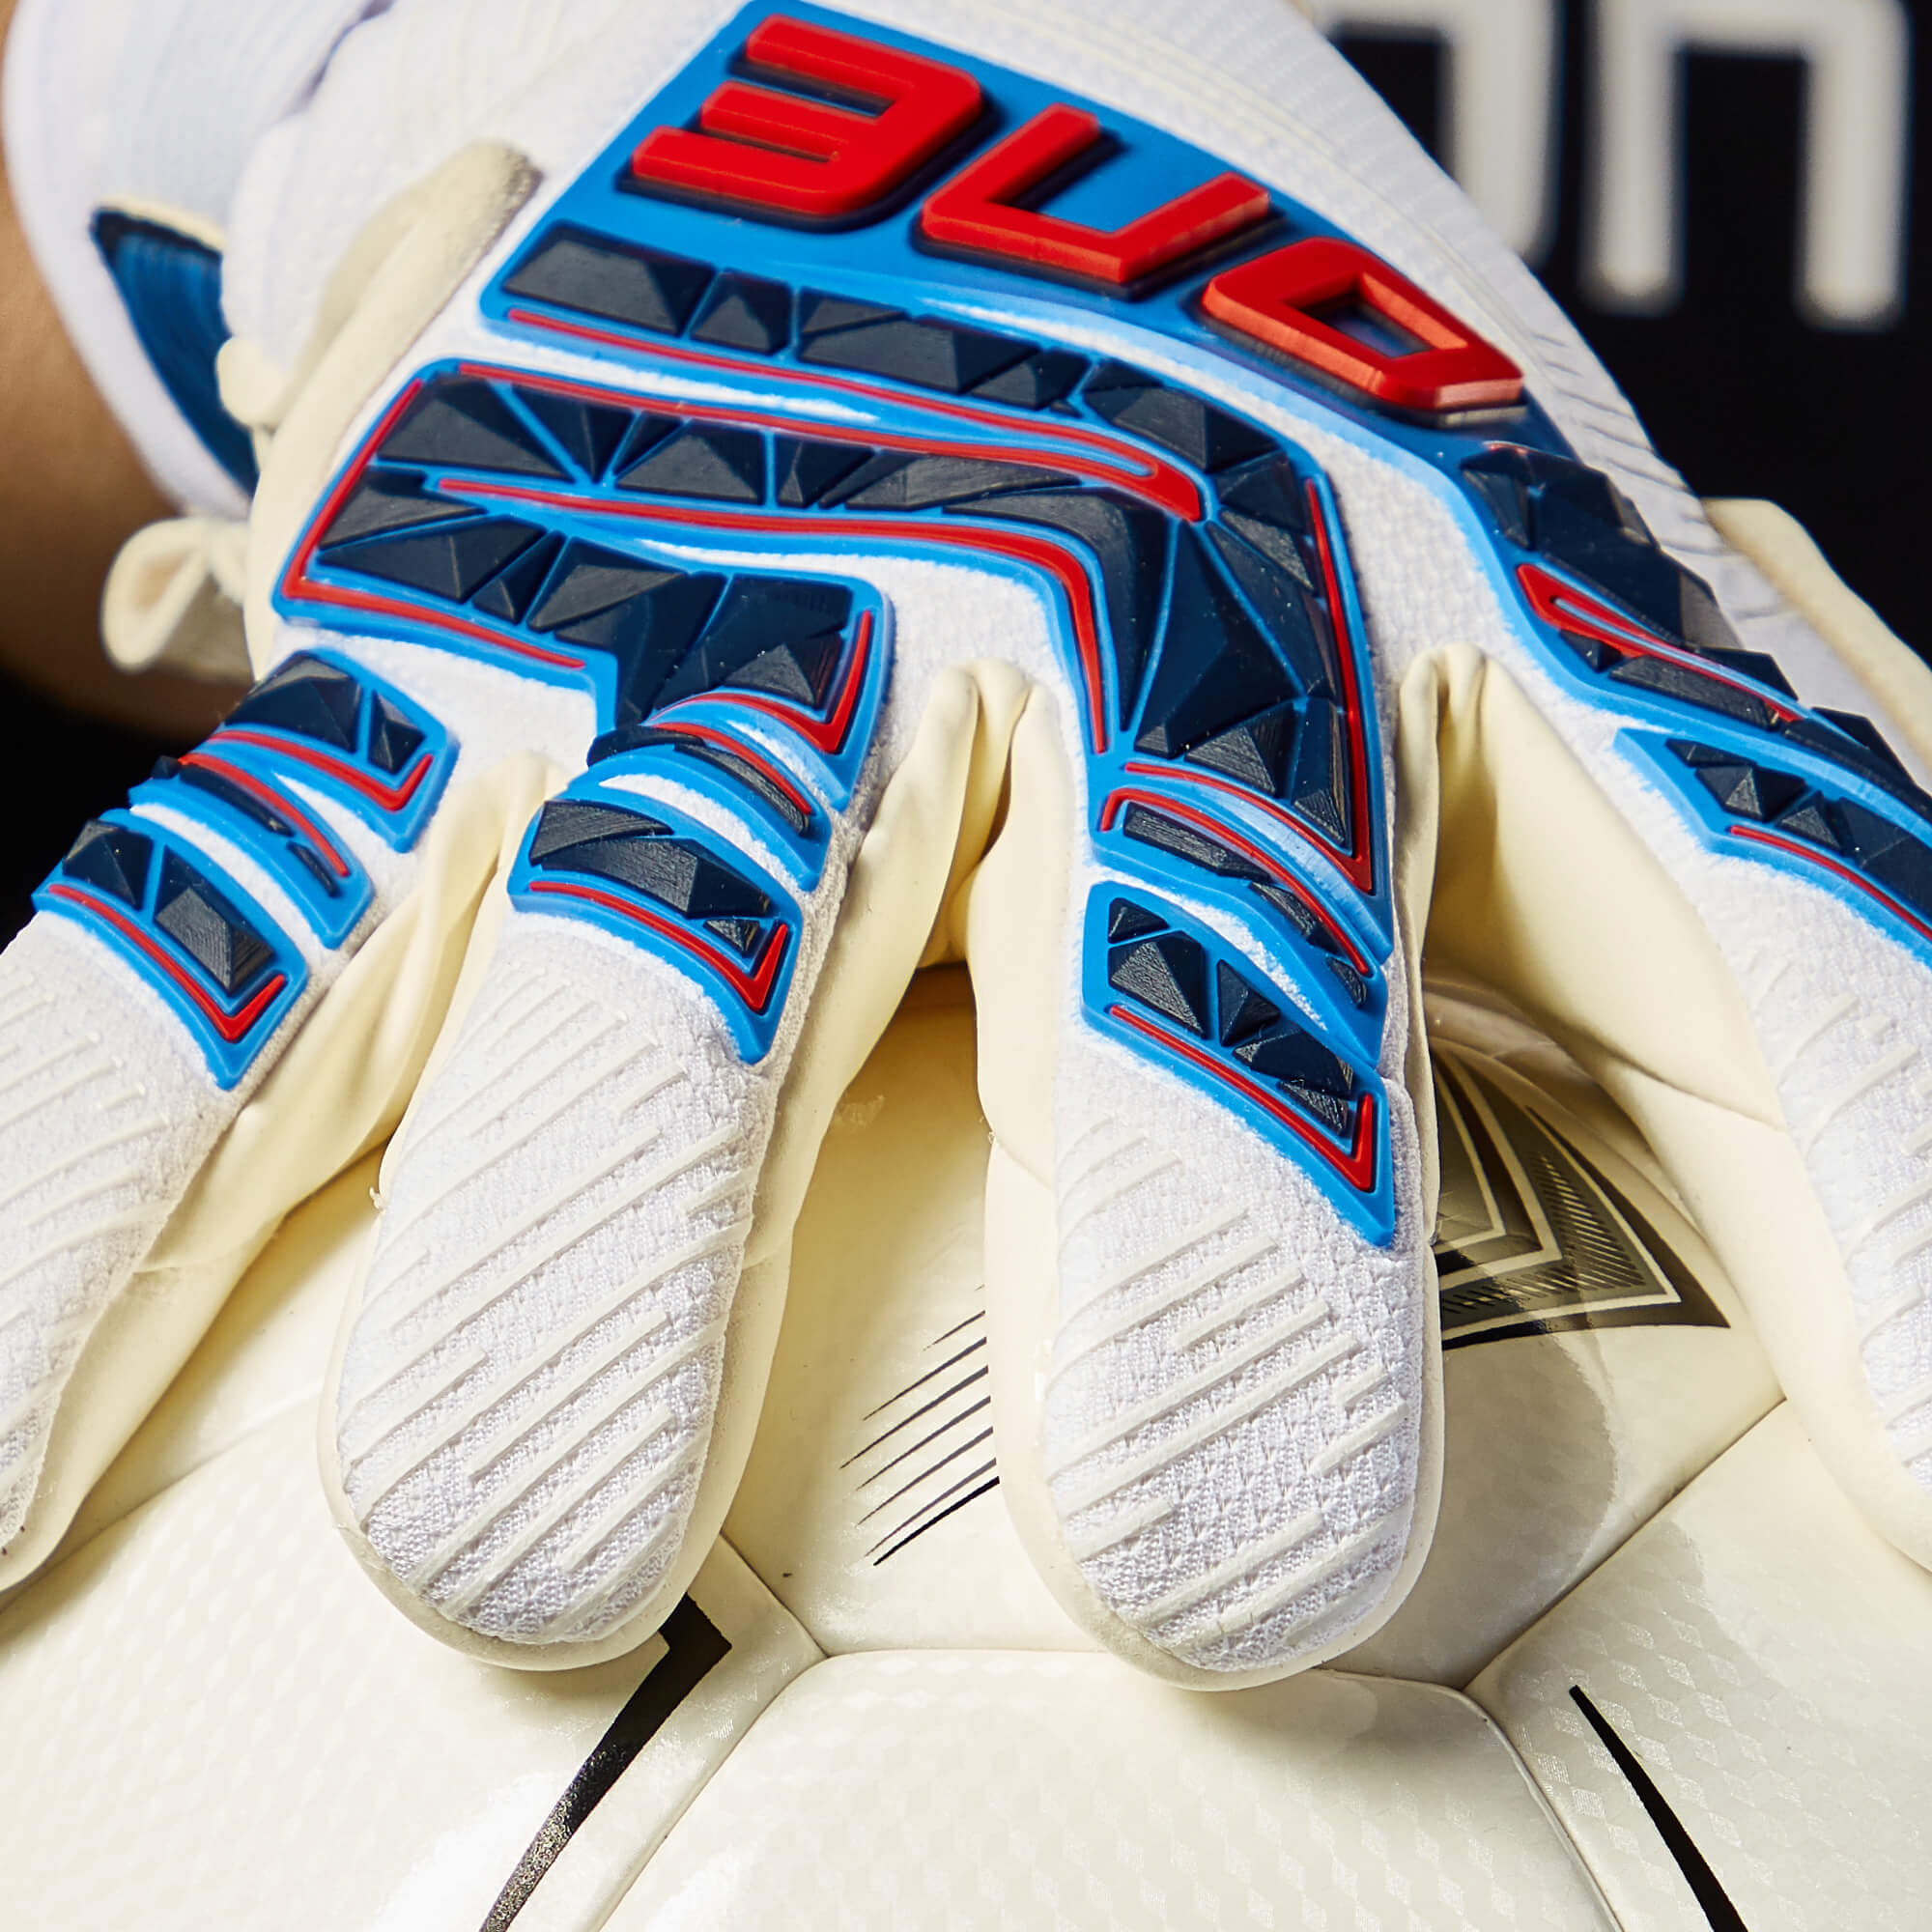 APEX Pro Super Goalkeeper Gloves | Hybrid Cut | One Glove